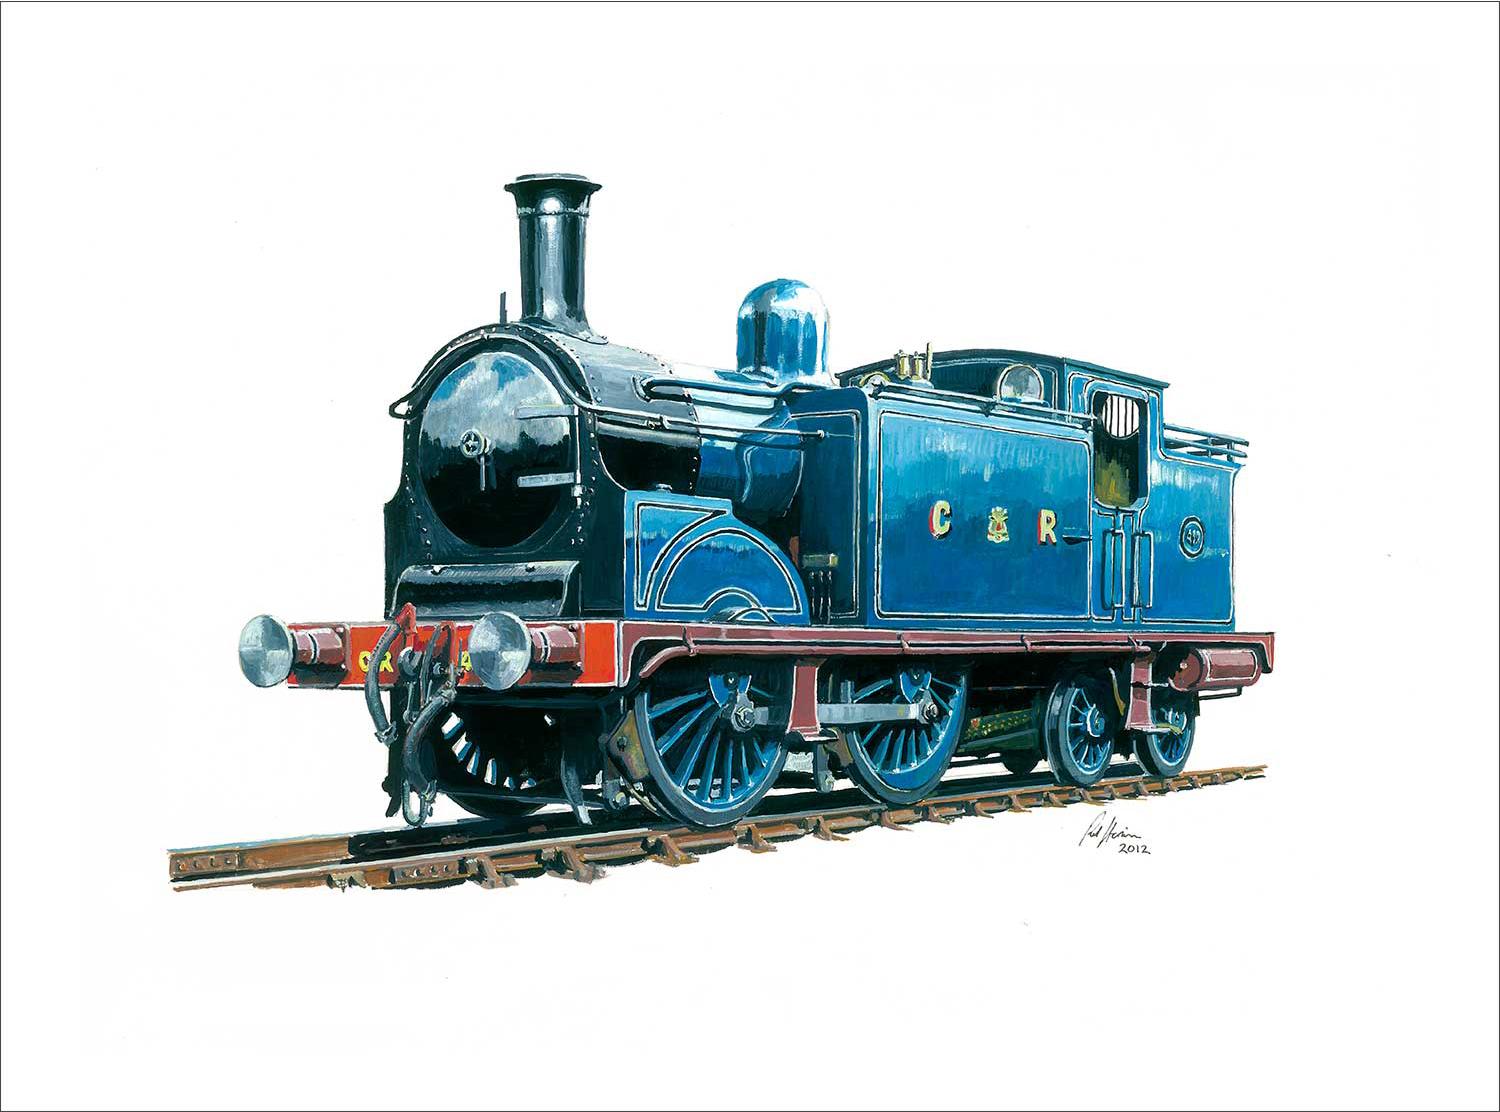 Caledonian Railway No 419 Built 1907 at St Rollox Art Print from an original painted by artist Rod Harrison